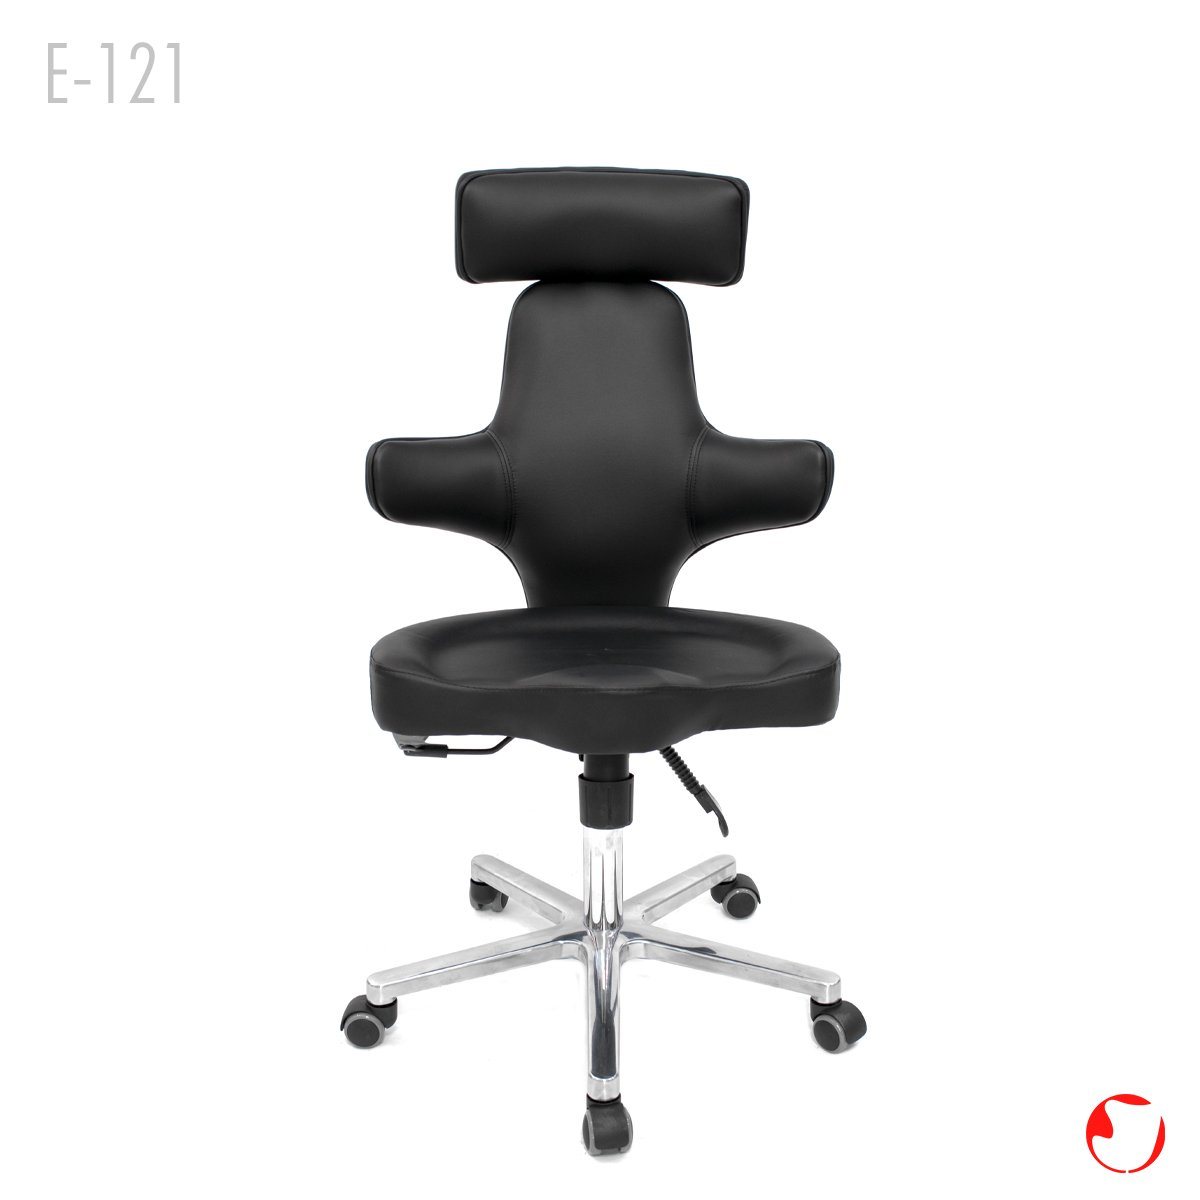 Tu silla de oficina ideal — Muebles de Oficina Mugui S.A.